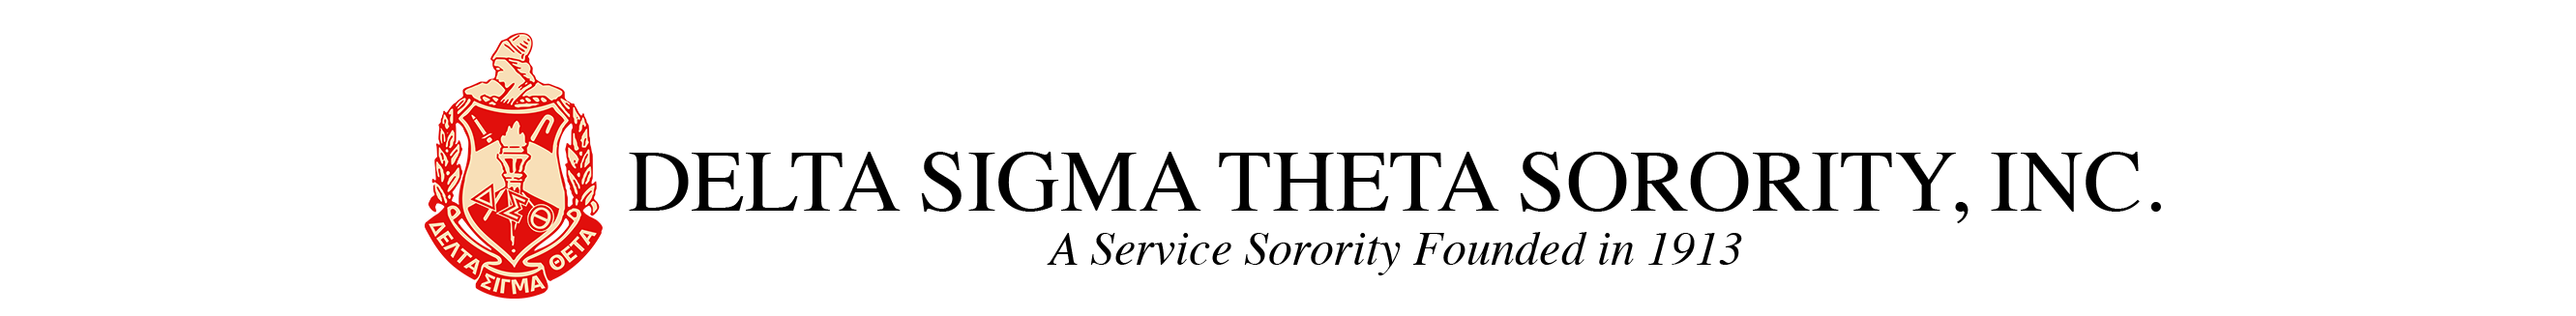 Sorority Logo - Delta Sigma Theta Sorority, Inc.